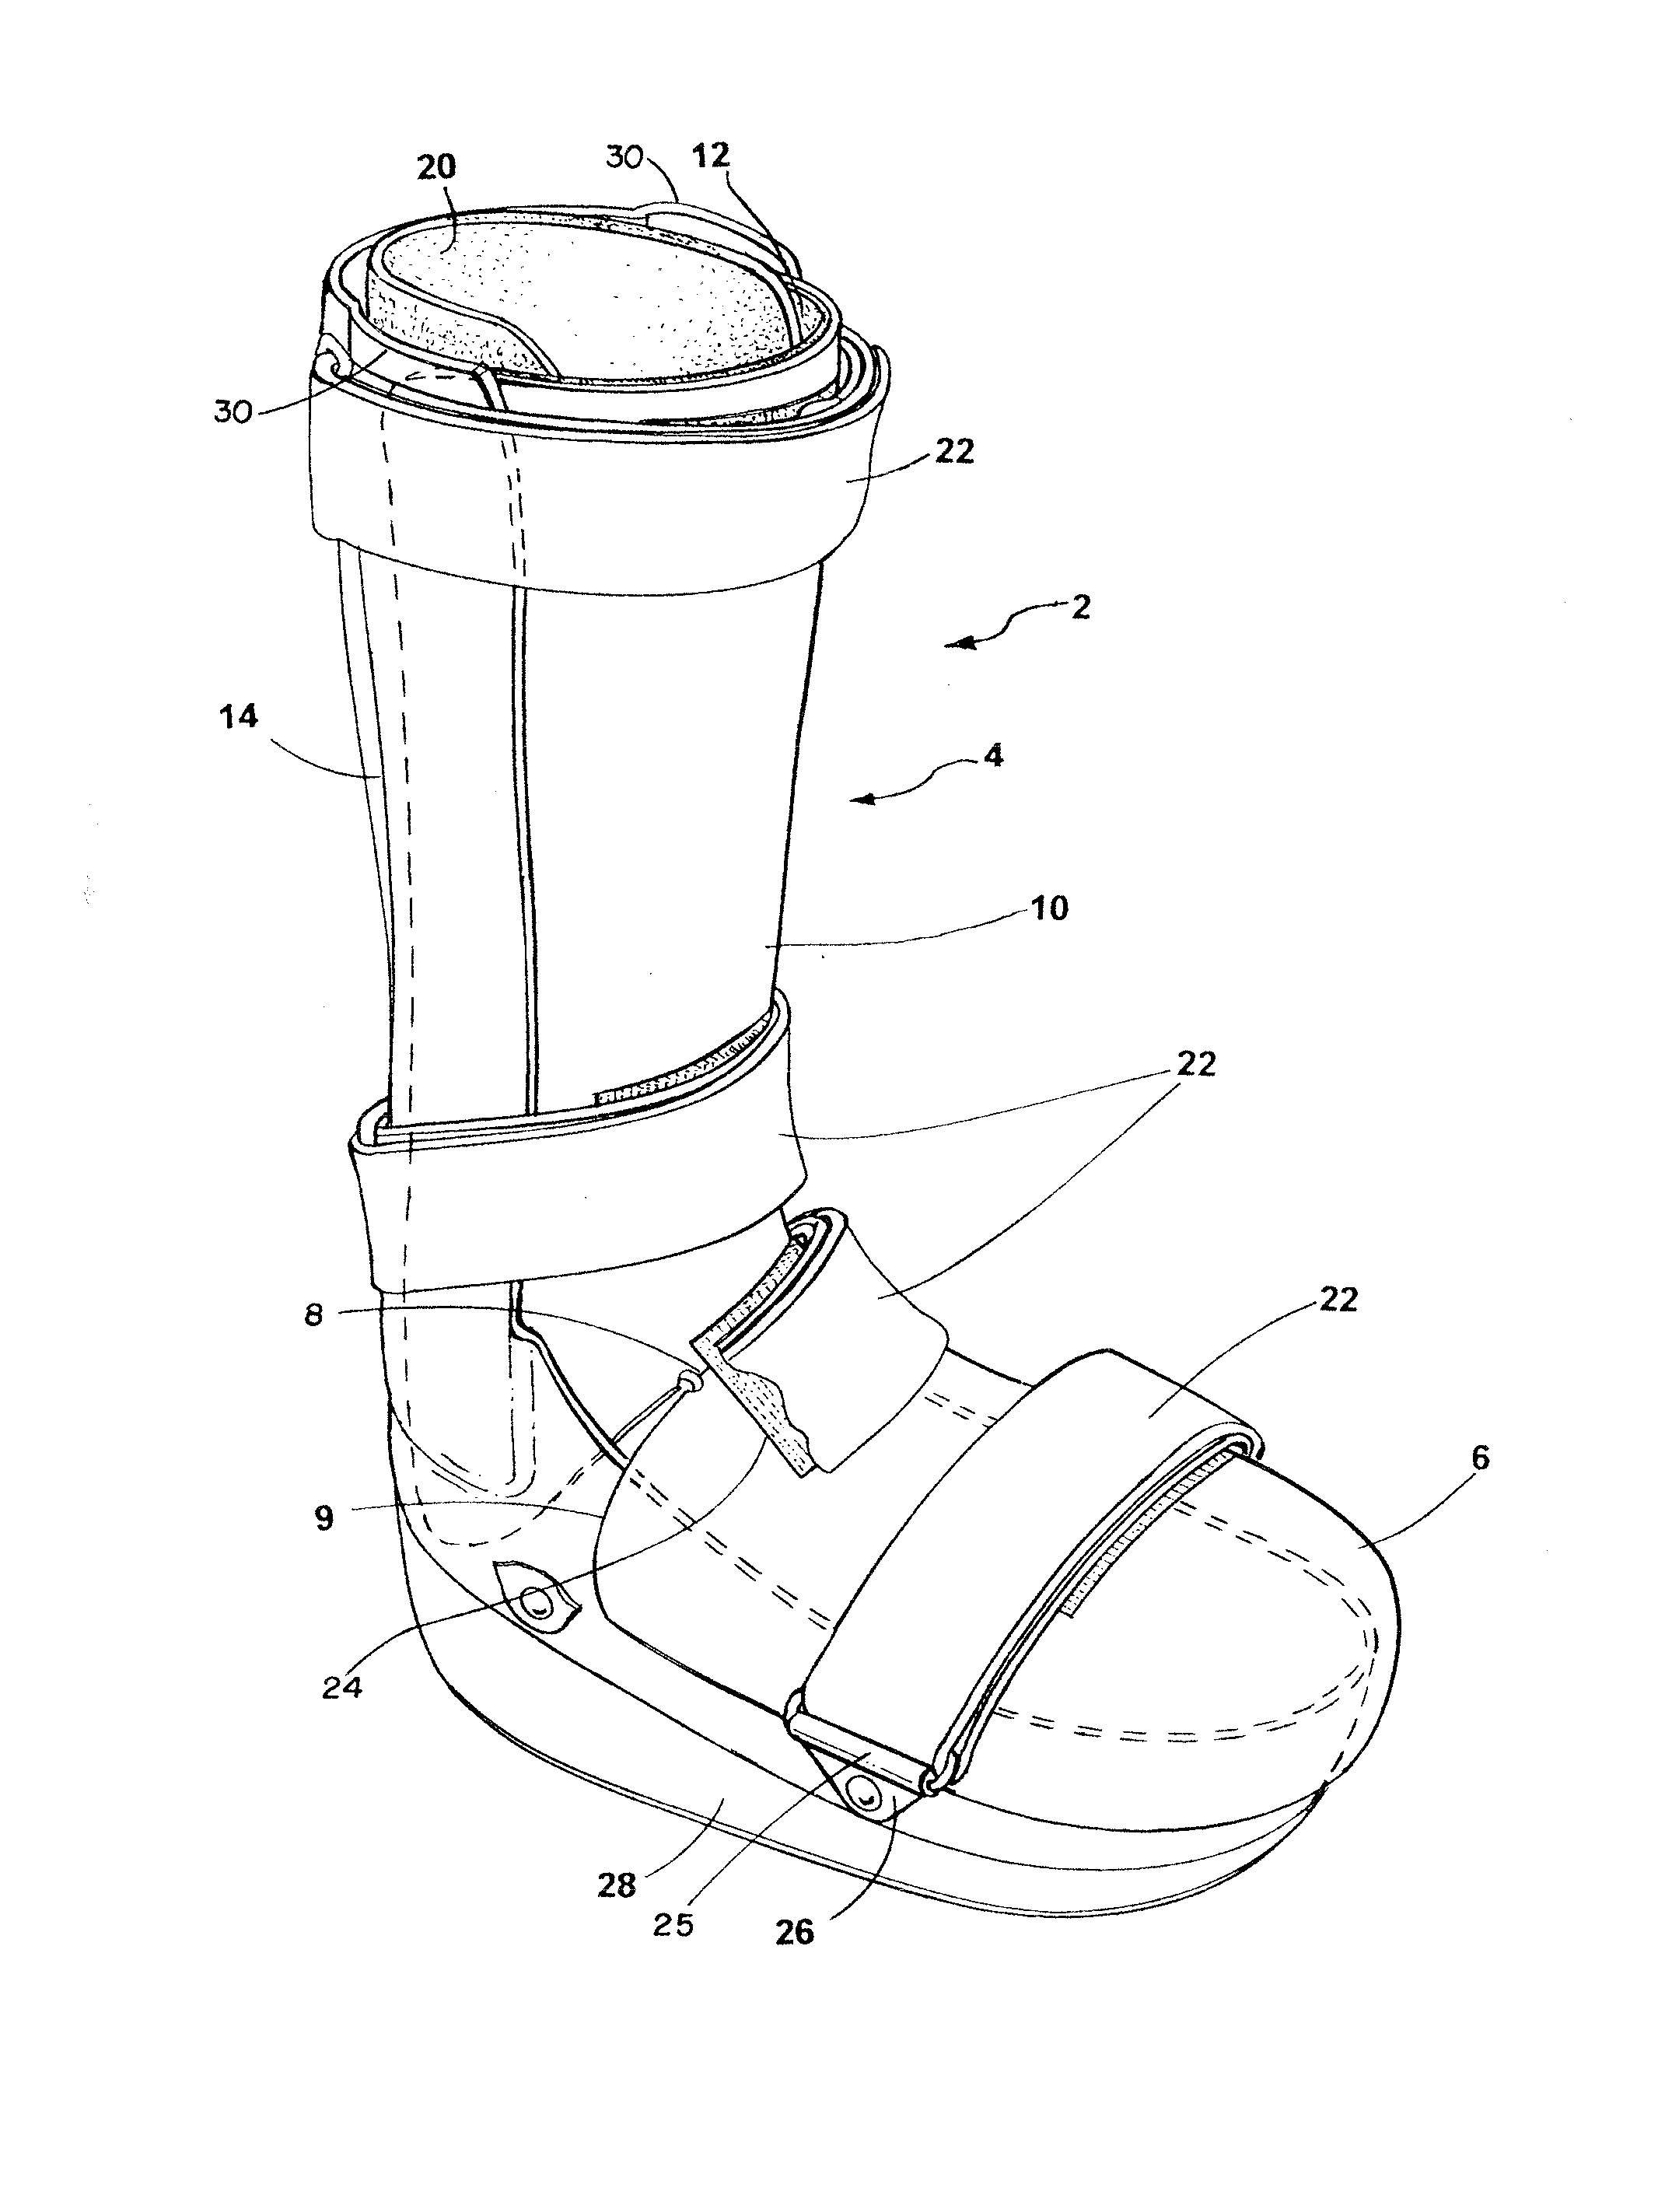 Orthosis walking boot